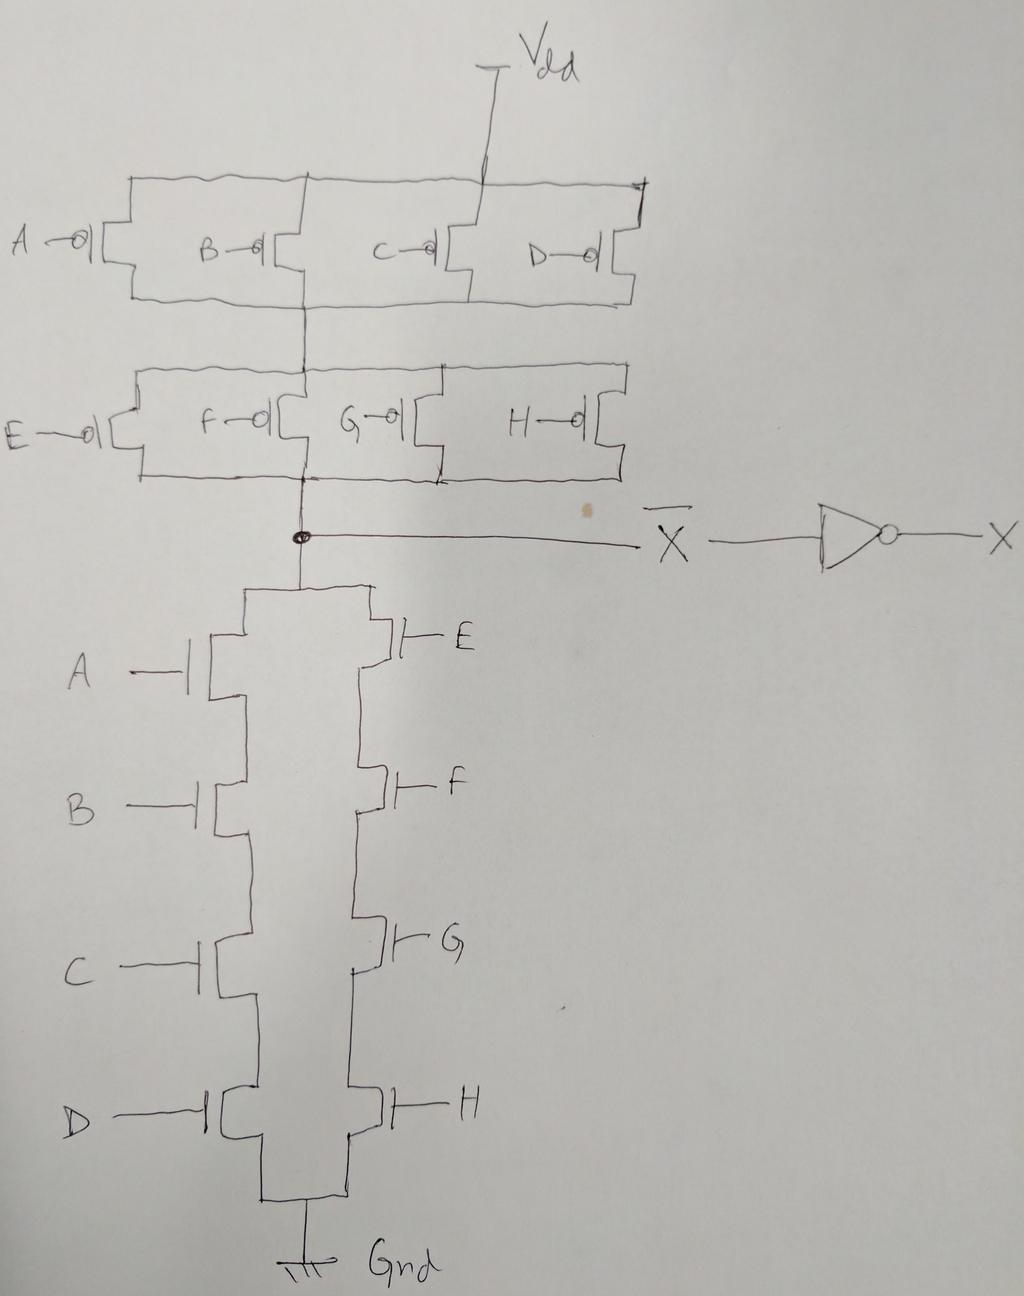 c) (5%) Draw a compound gate